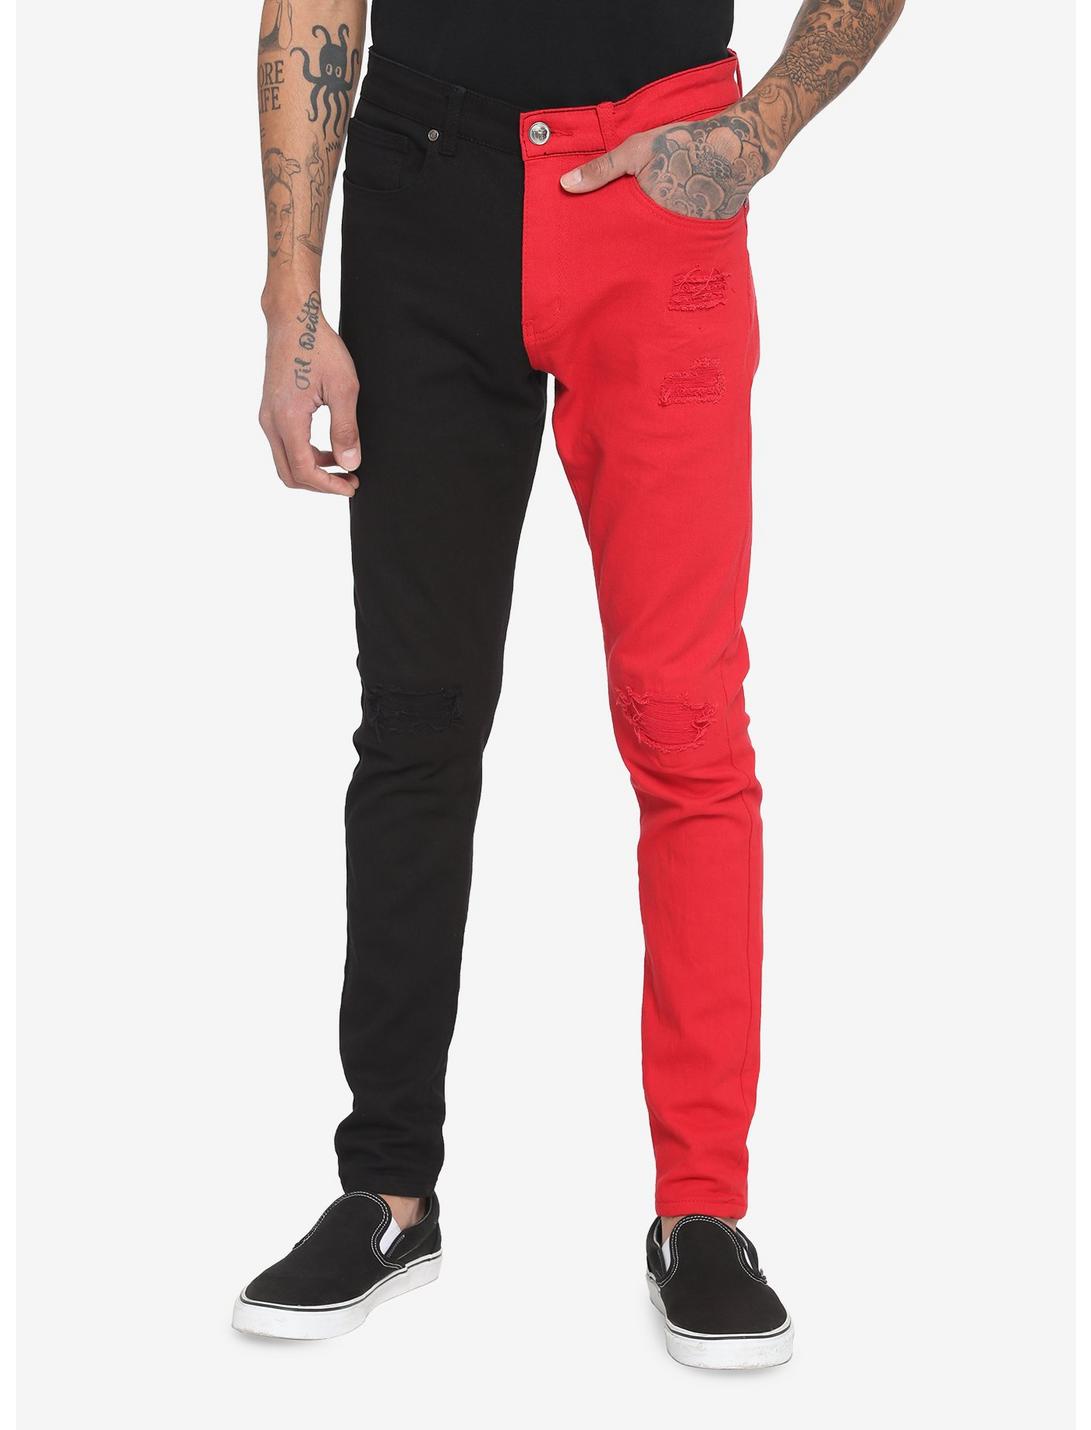 Red & Black Distressed Split-Leg Skinny Jeans, BLACK  RED, hi-res